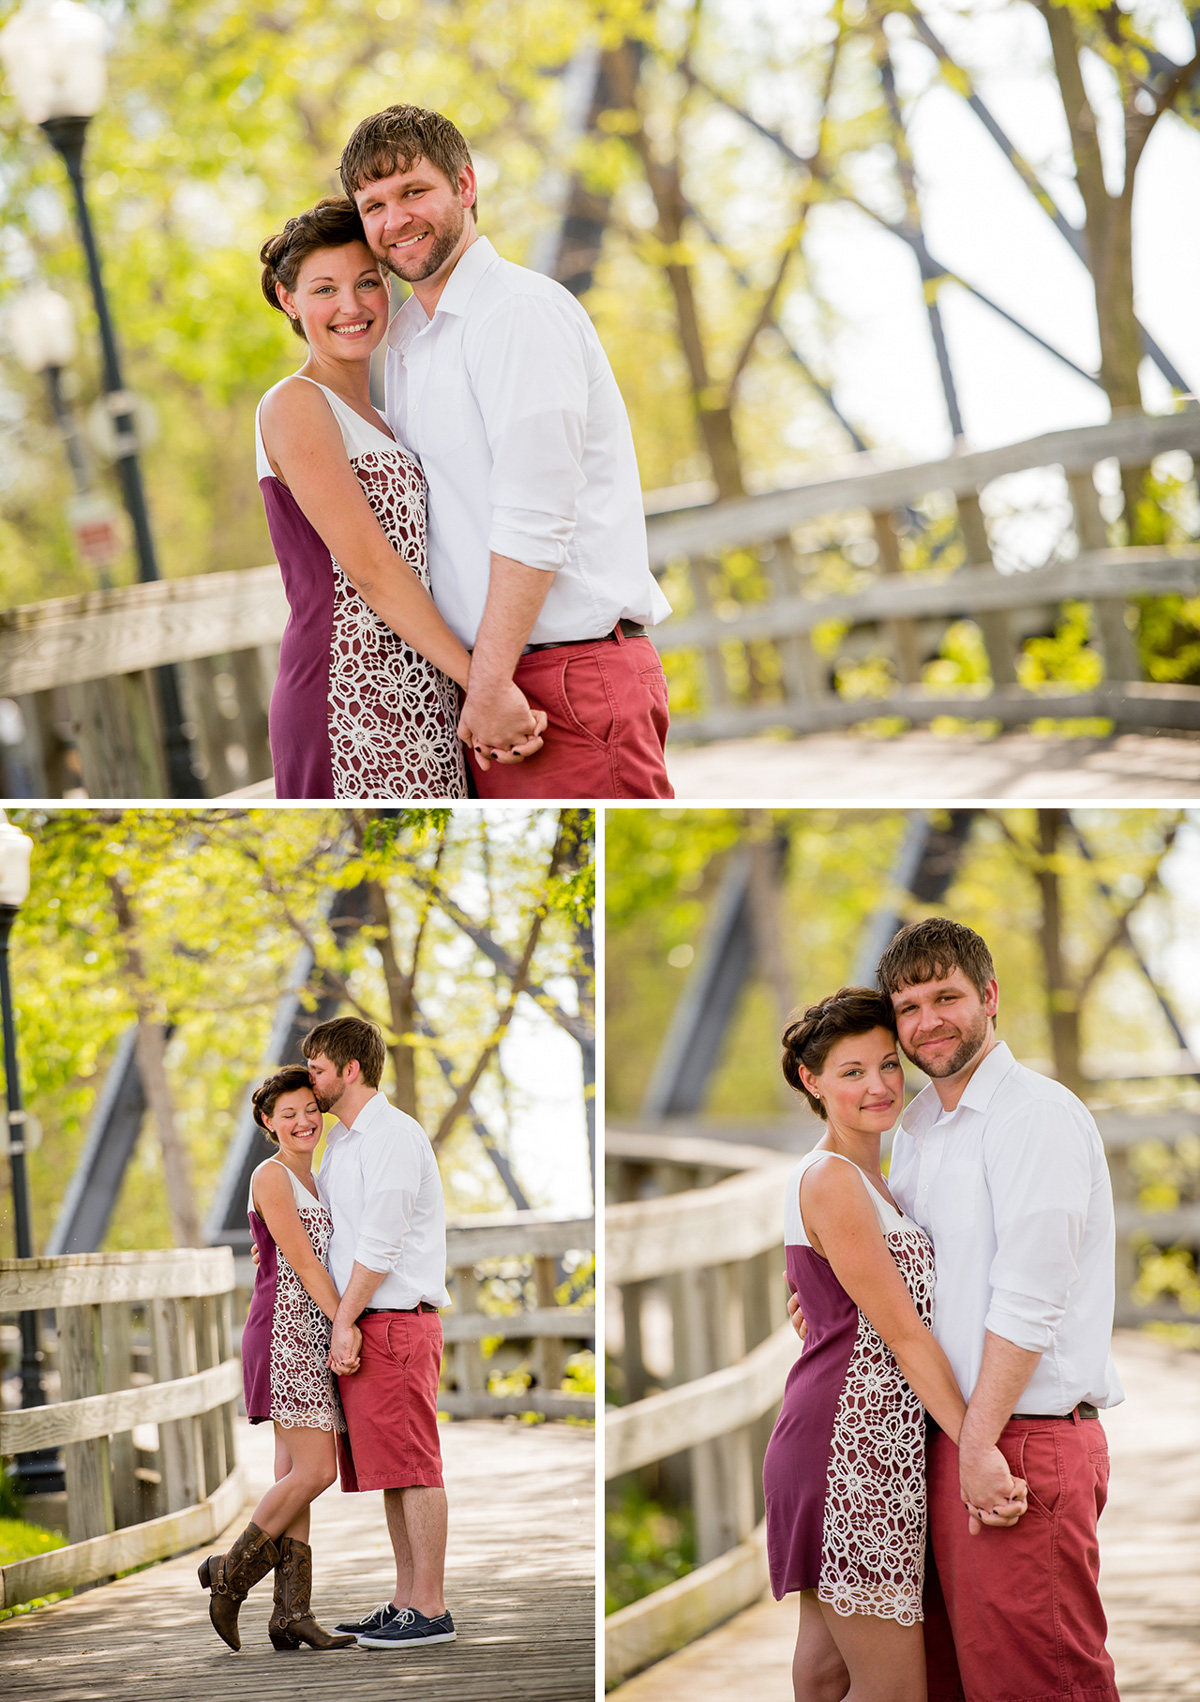 Mindy & David // Fort Wayne Engagement Photography - Dustin & Corynn